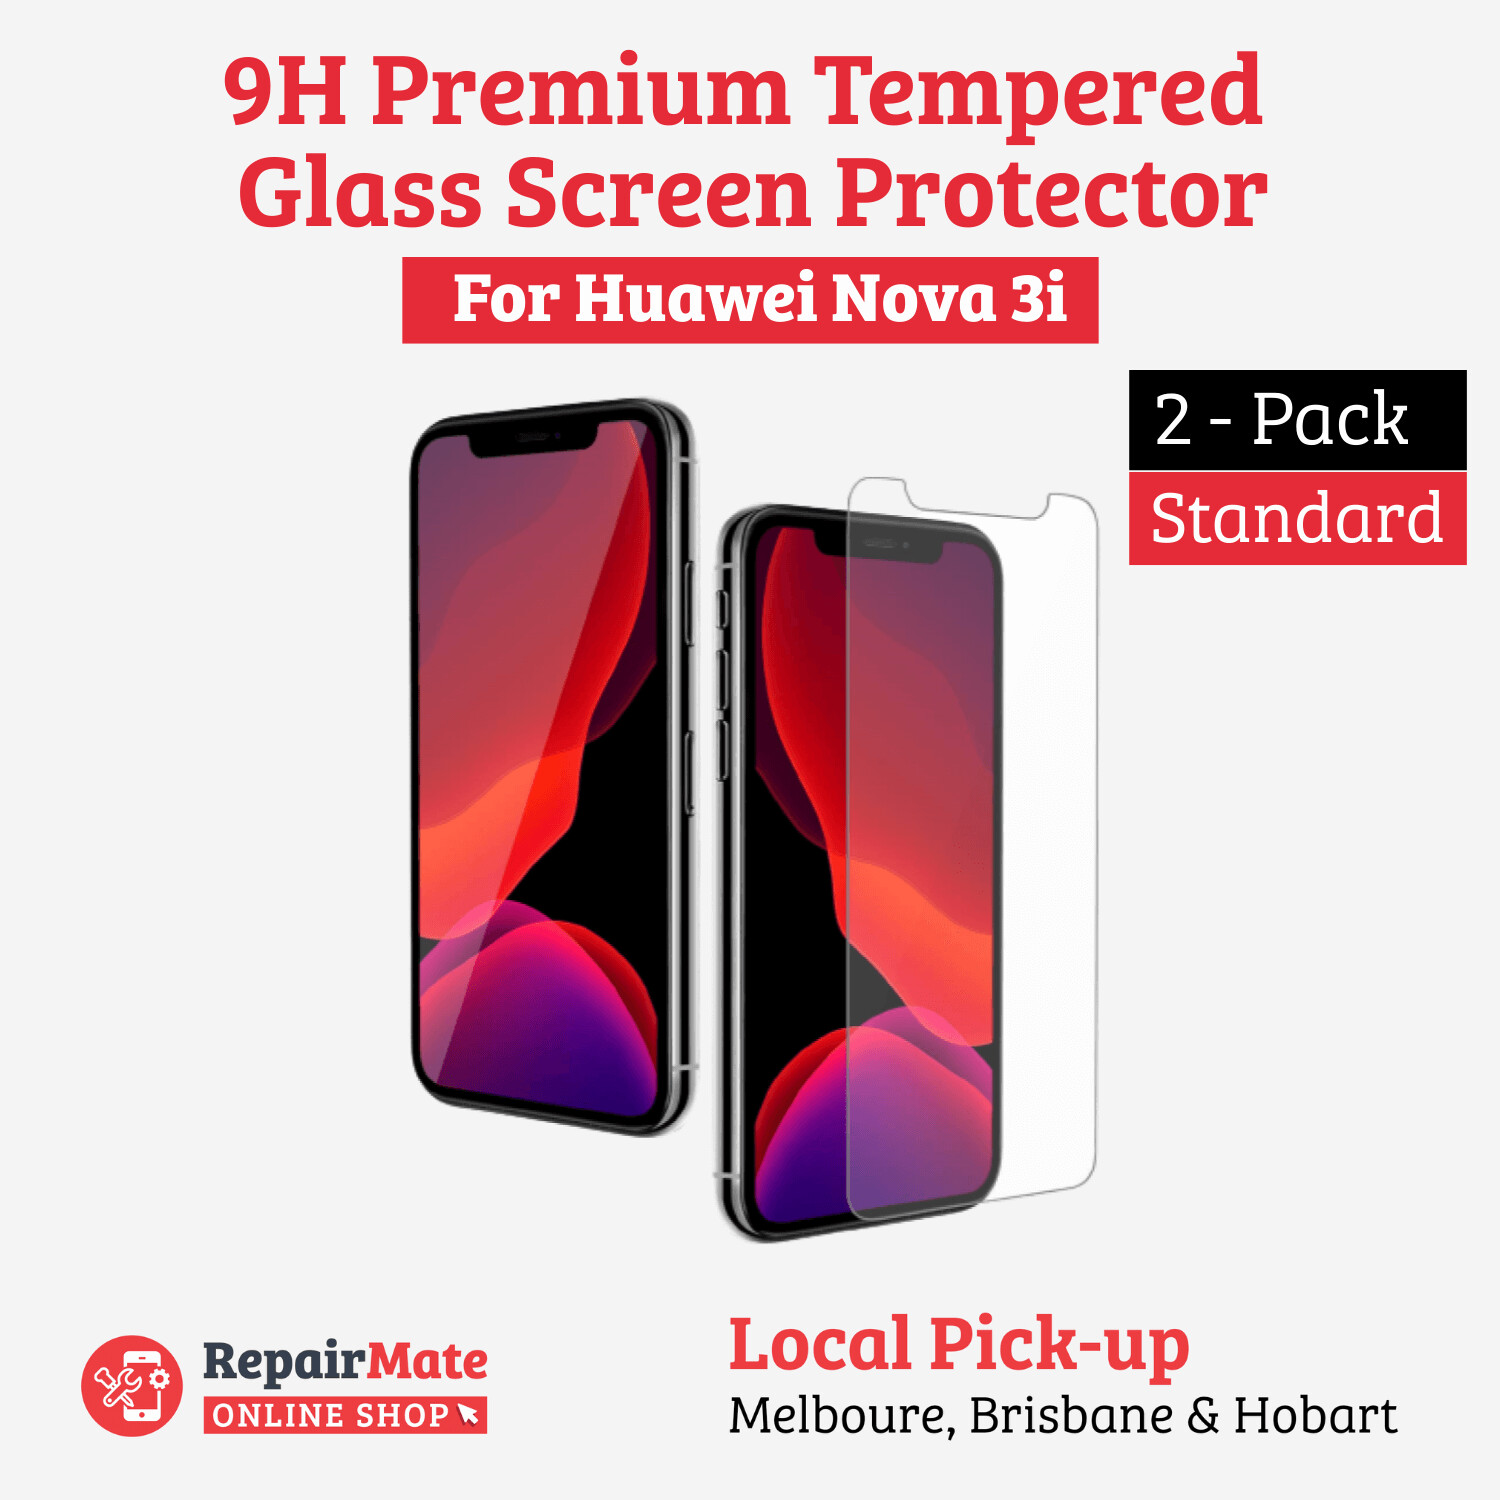 Huawei Nova 3i 9H Premium Tempered Glass Screen Protector [2 Pack]